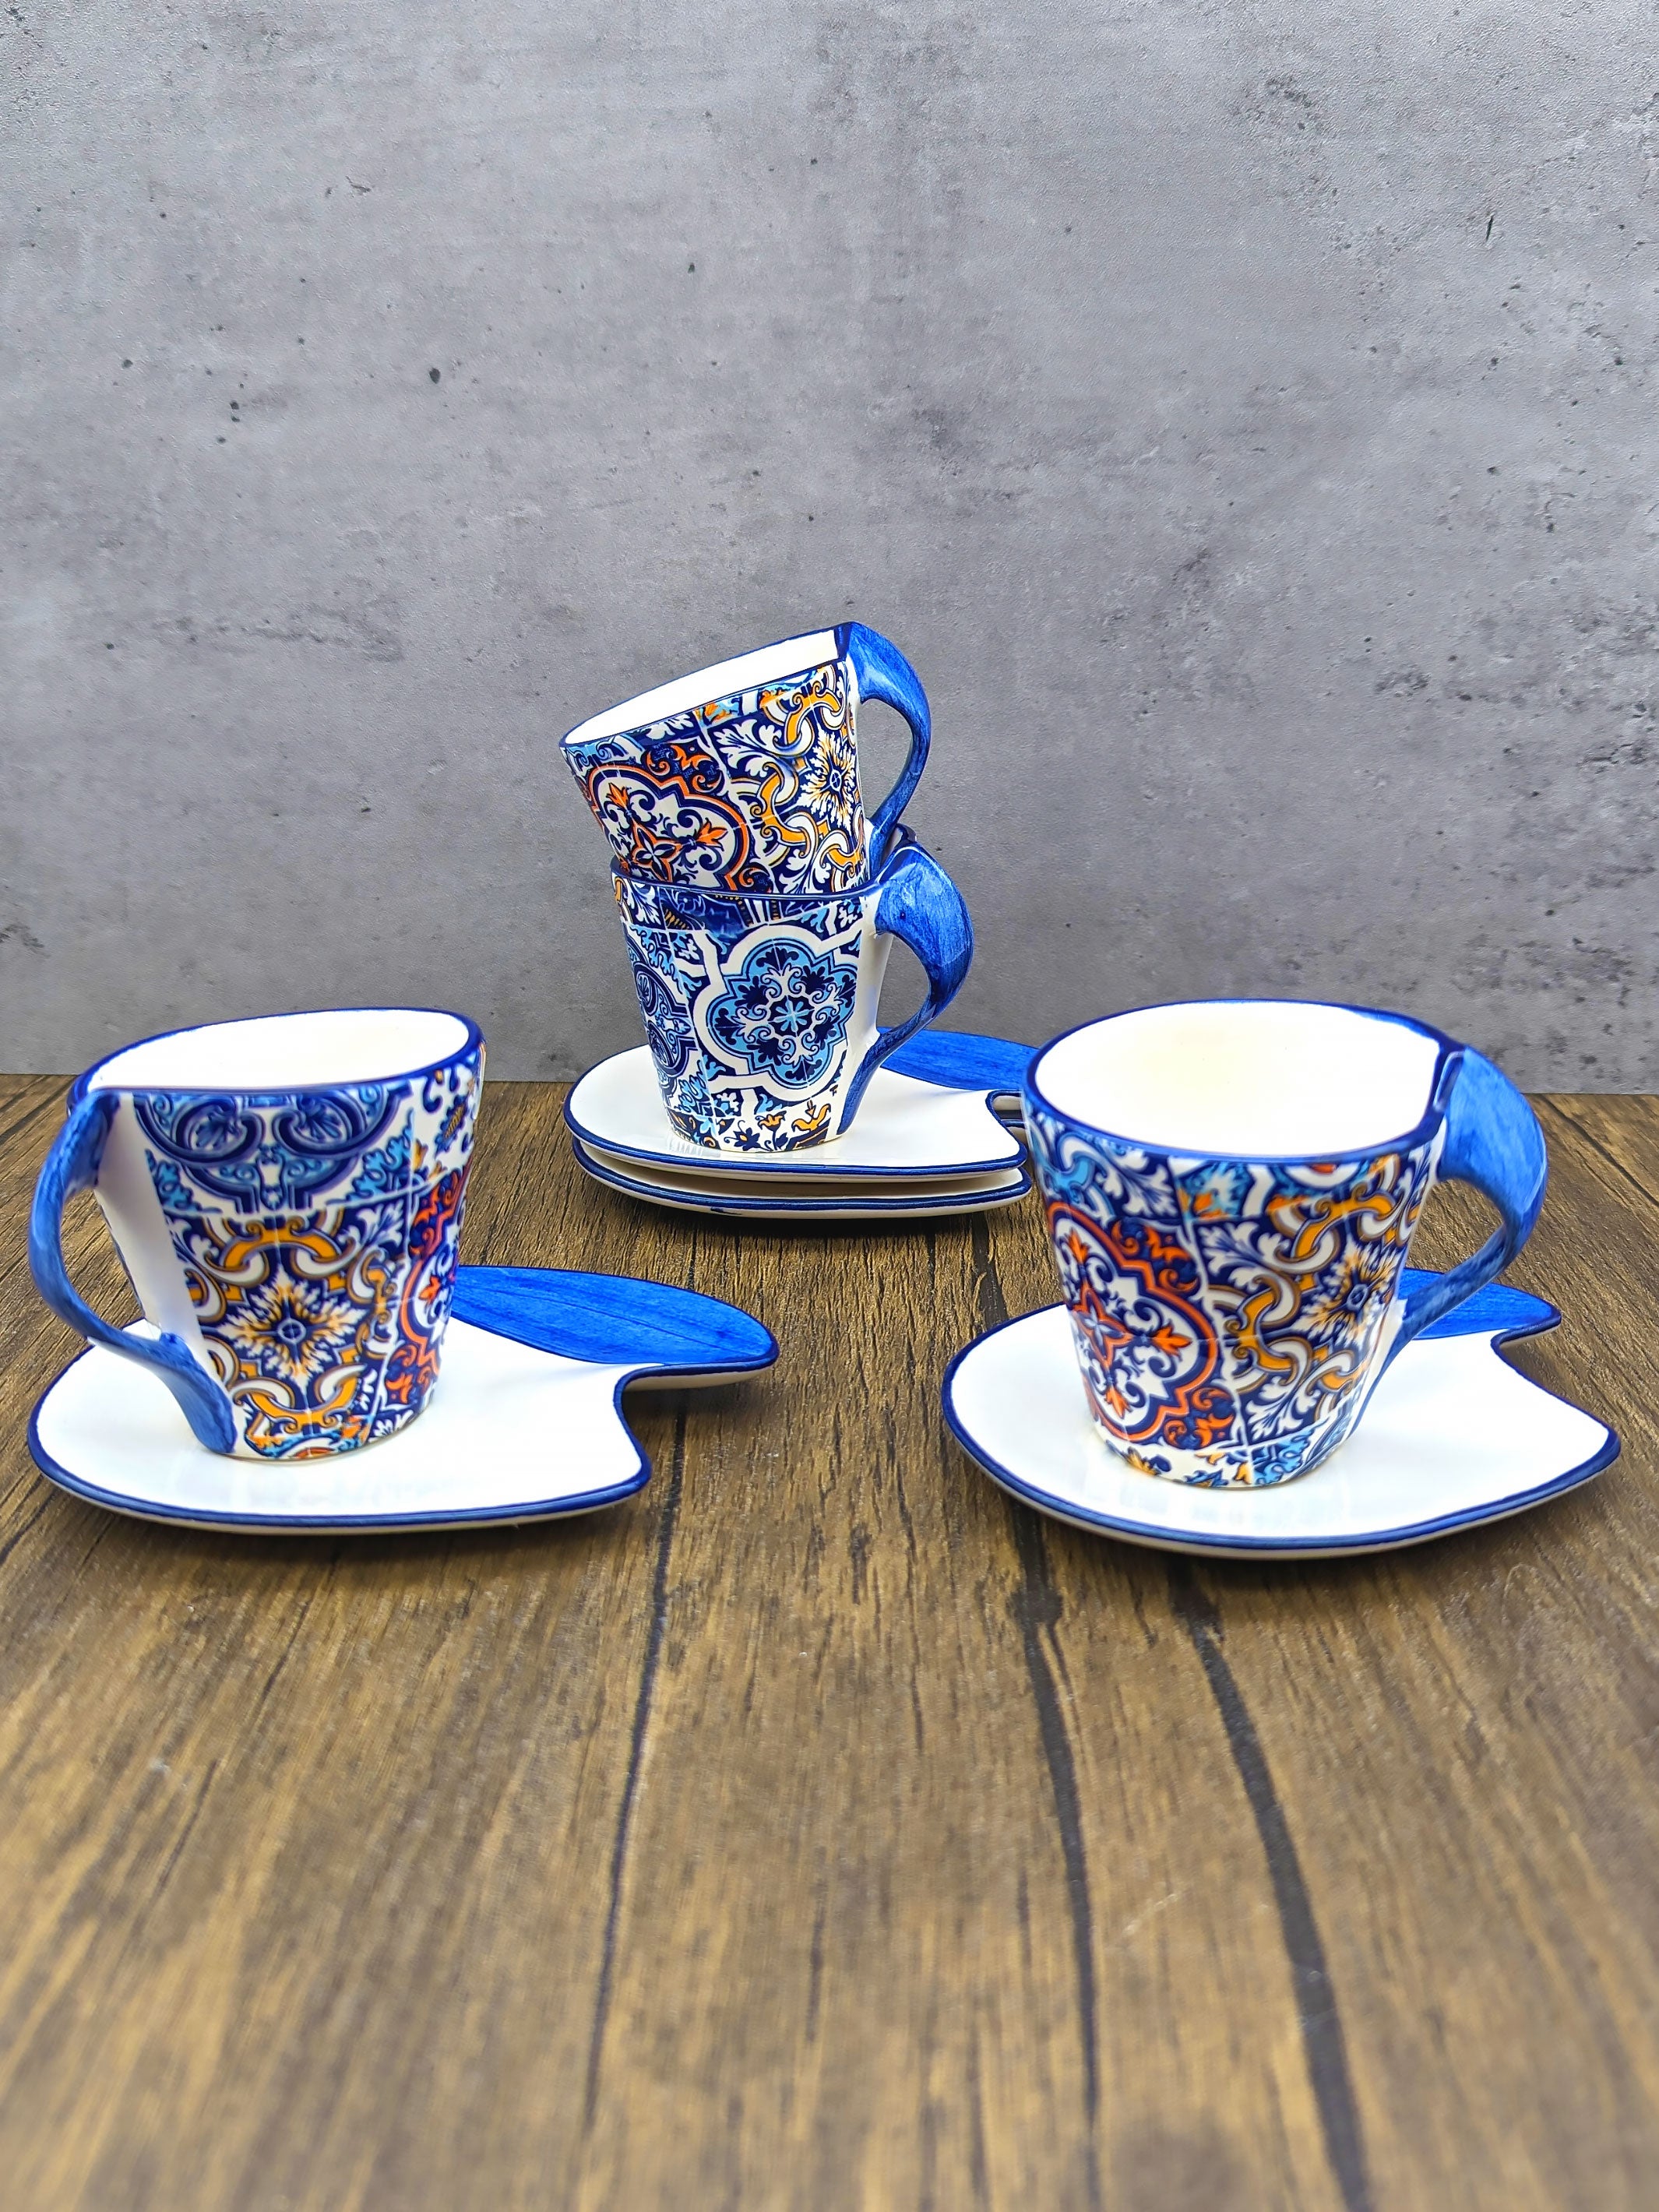 Portuguese Pottery Alcobaça Ceramic Hand Painted Coffee Espresso Cups – Set of 4